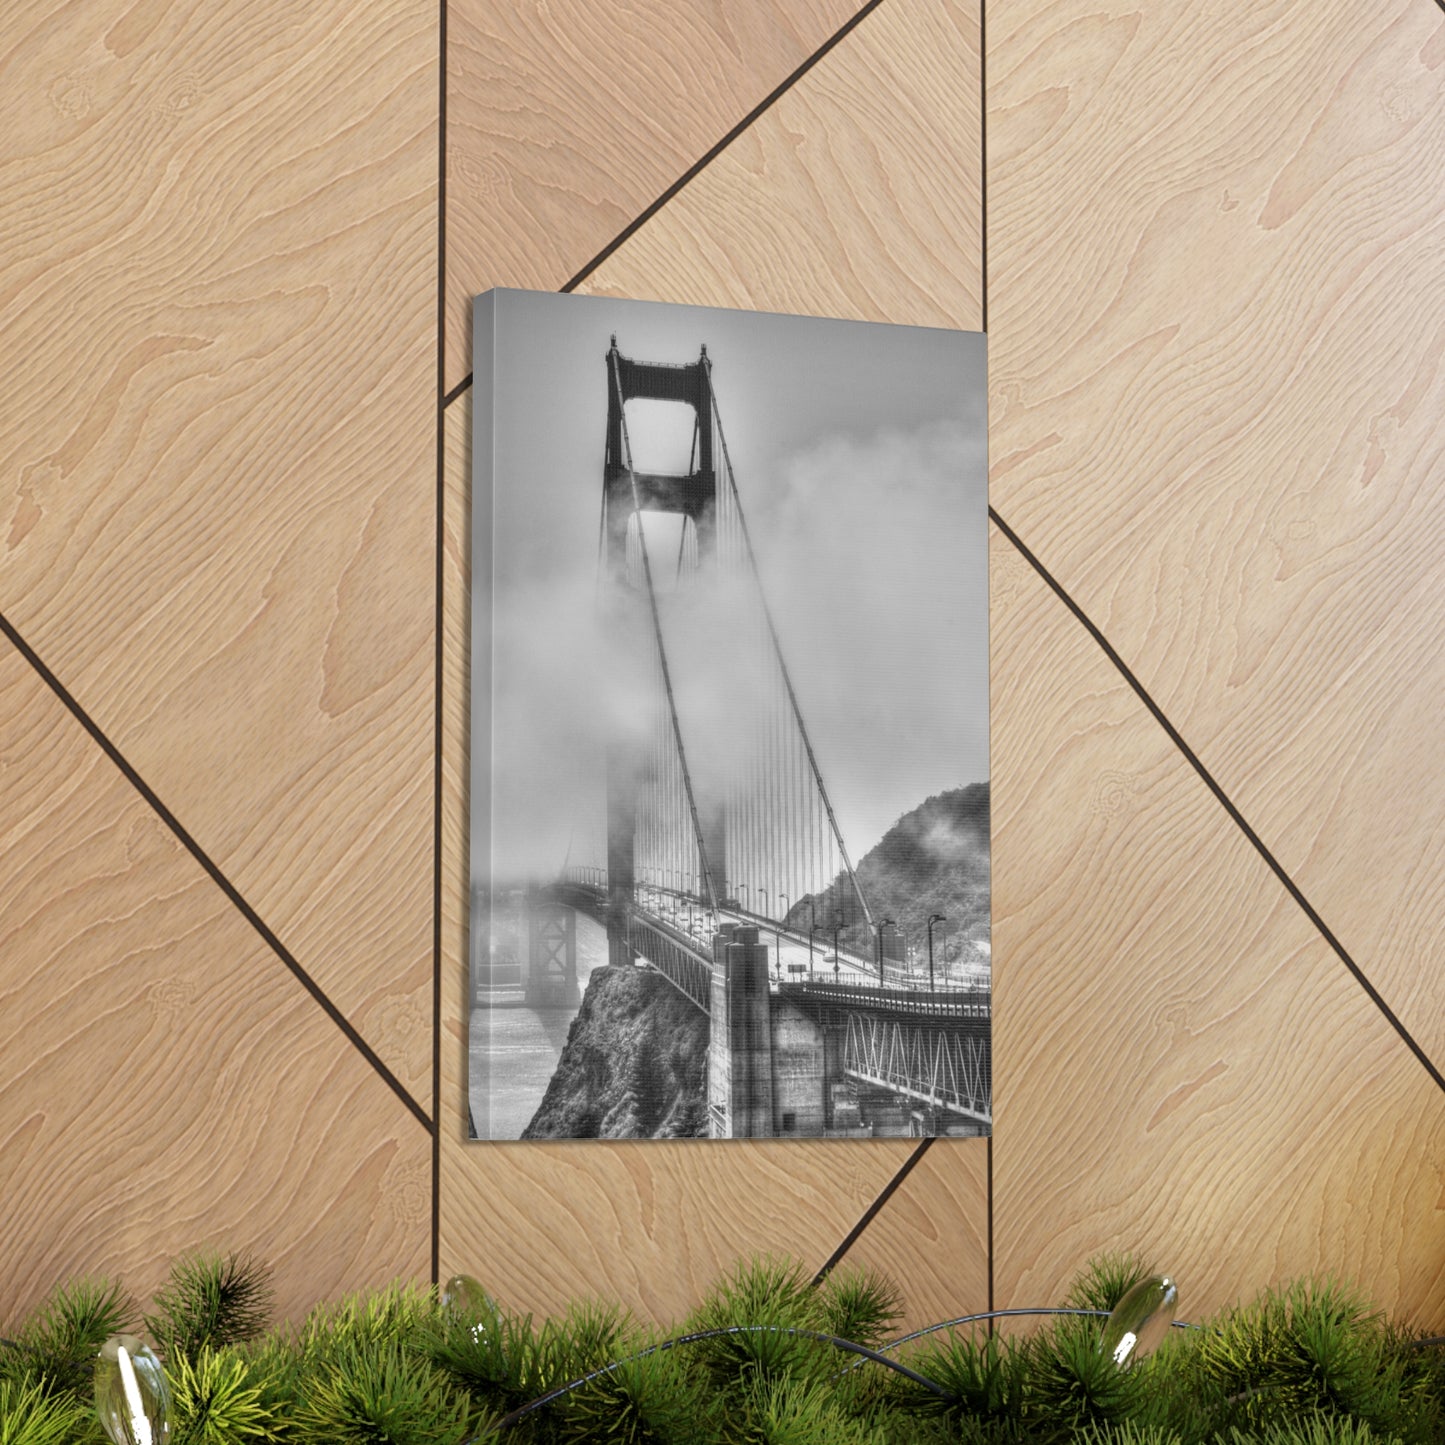 Canvas Print Of Golden Gate Bridge In Fog In San Francisco For Wall Art